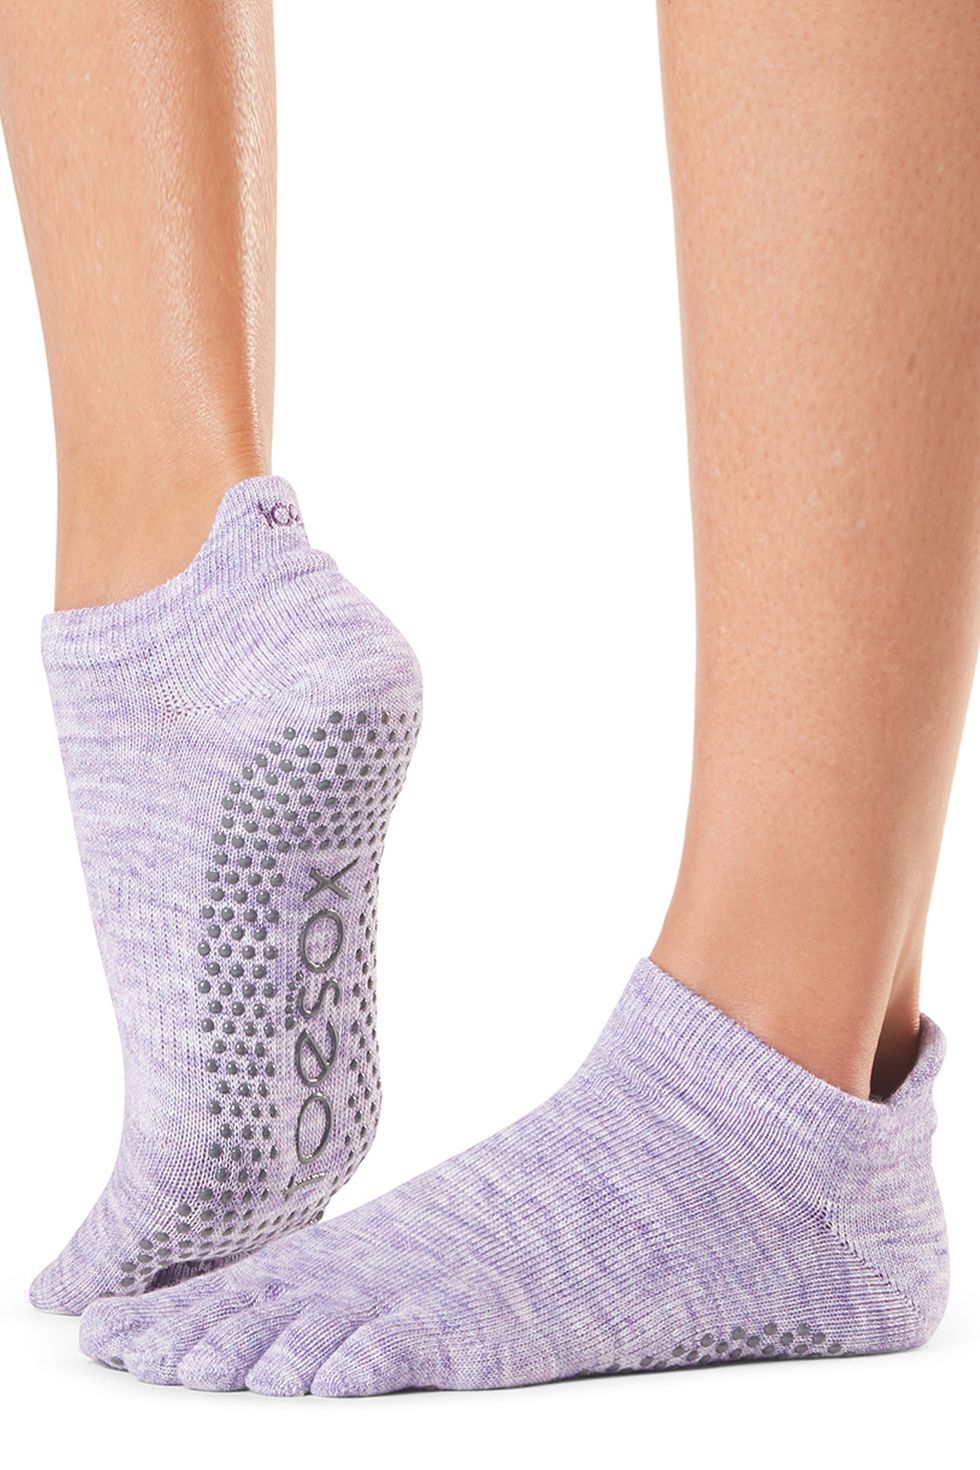 Yoga Pivot Barre Socks Cotton Silicone Non-slip Women High Quality